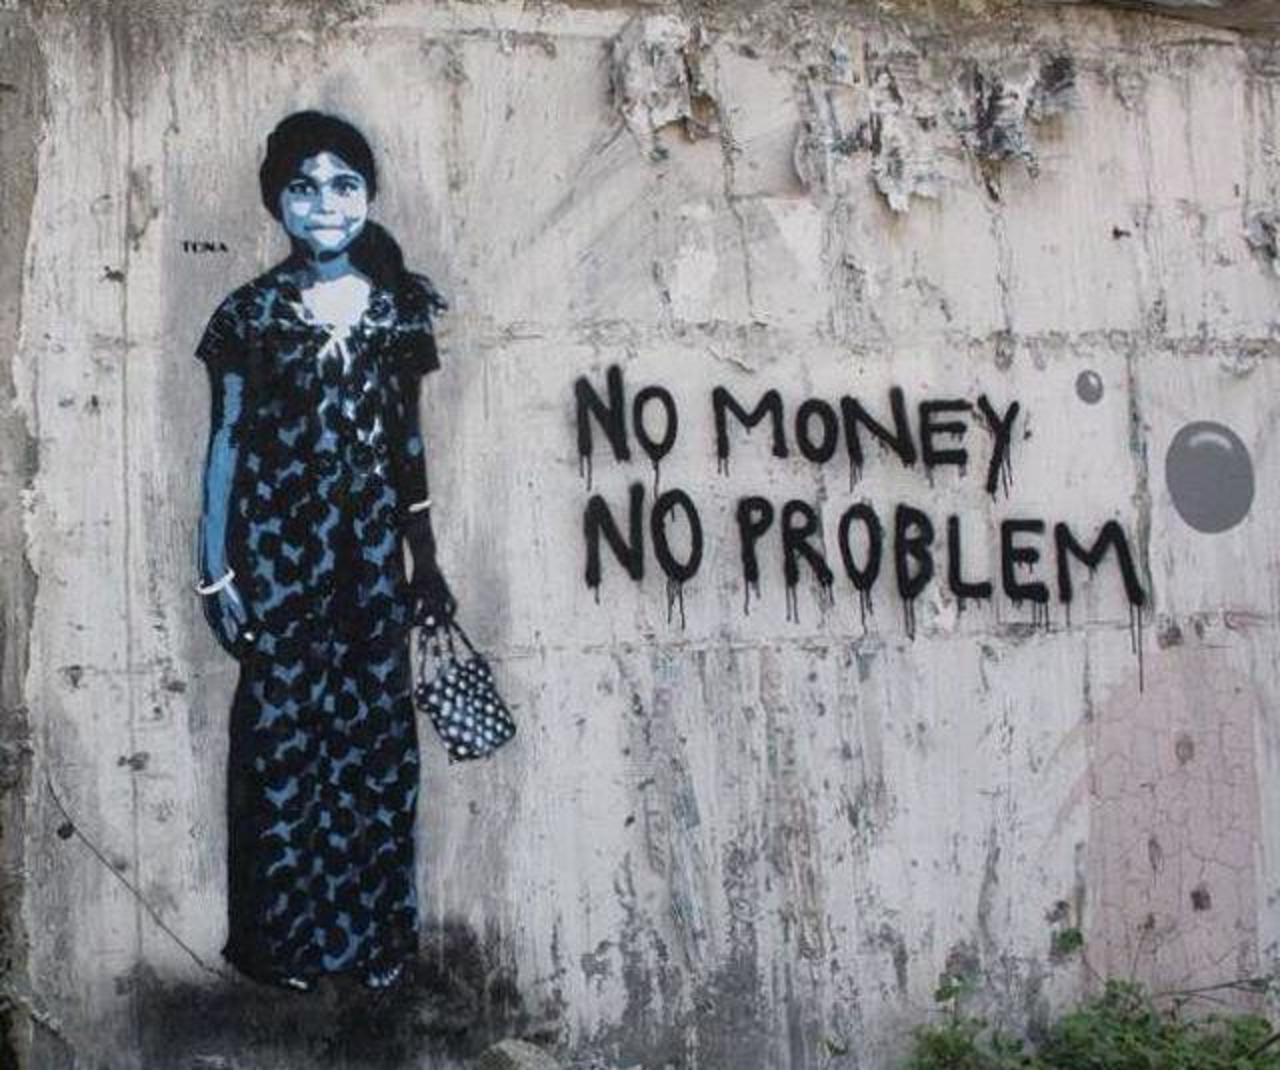 RT@GoogleStreetArt: No Money No Problem
Street Art by TONA in Pokara, Nepal 
#art #arte #graffiti #streetart http://t.co/DjAMxozpOZ"